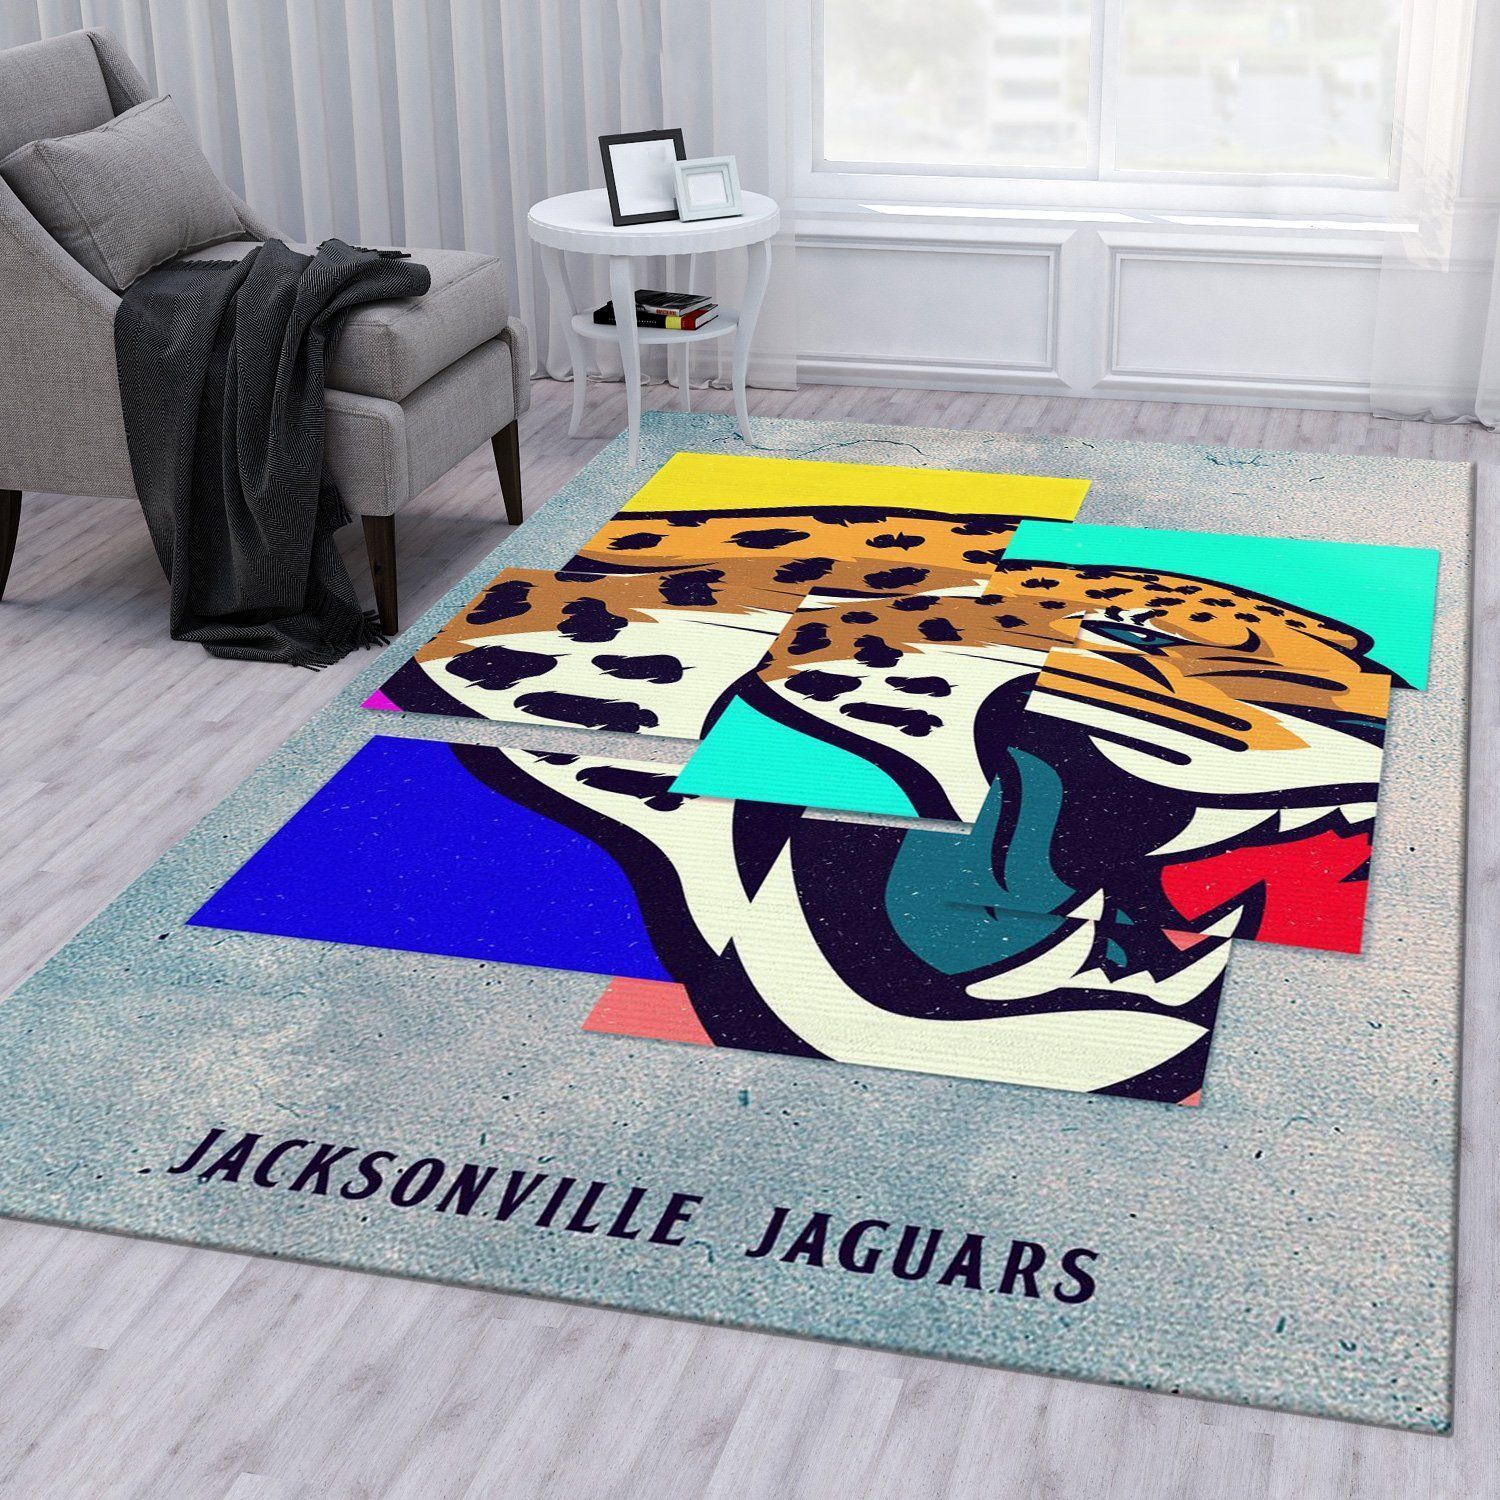 Jacksonville Jaguars NFL Area Rug Living Room Rug Home Decor Floor Decor - Indoor Outdoor Rugs